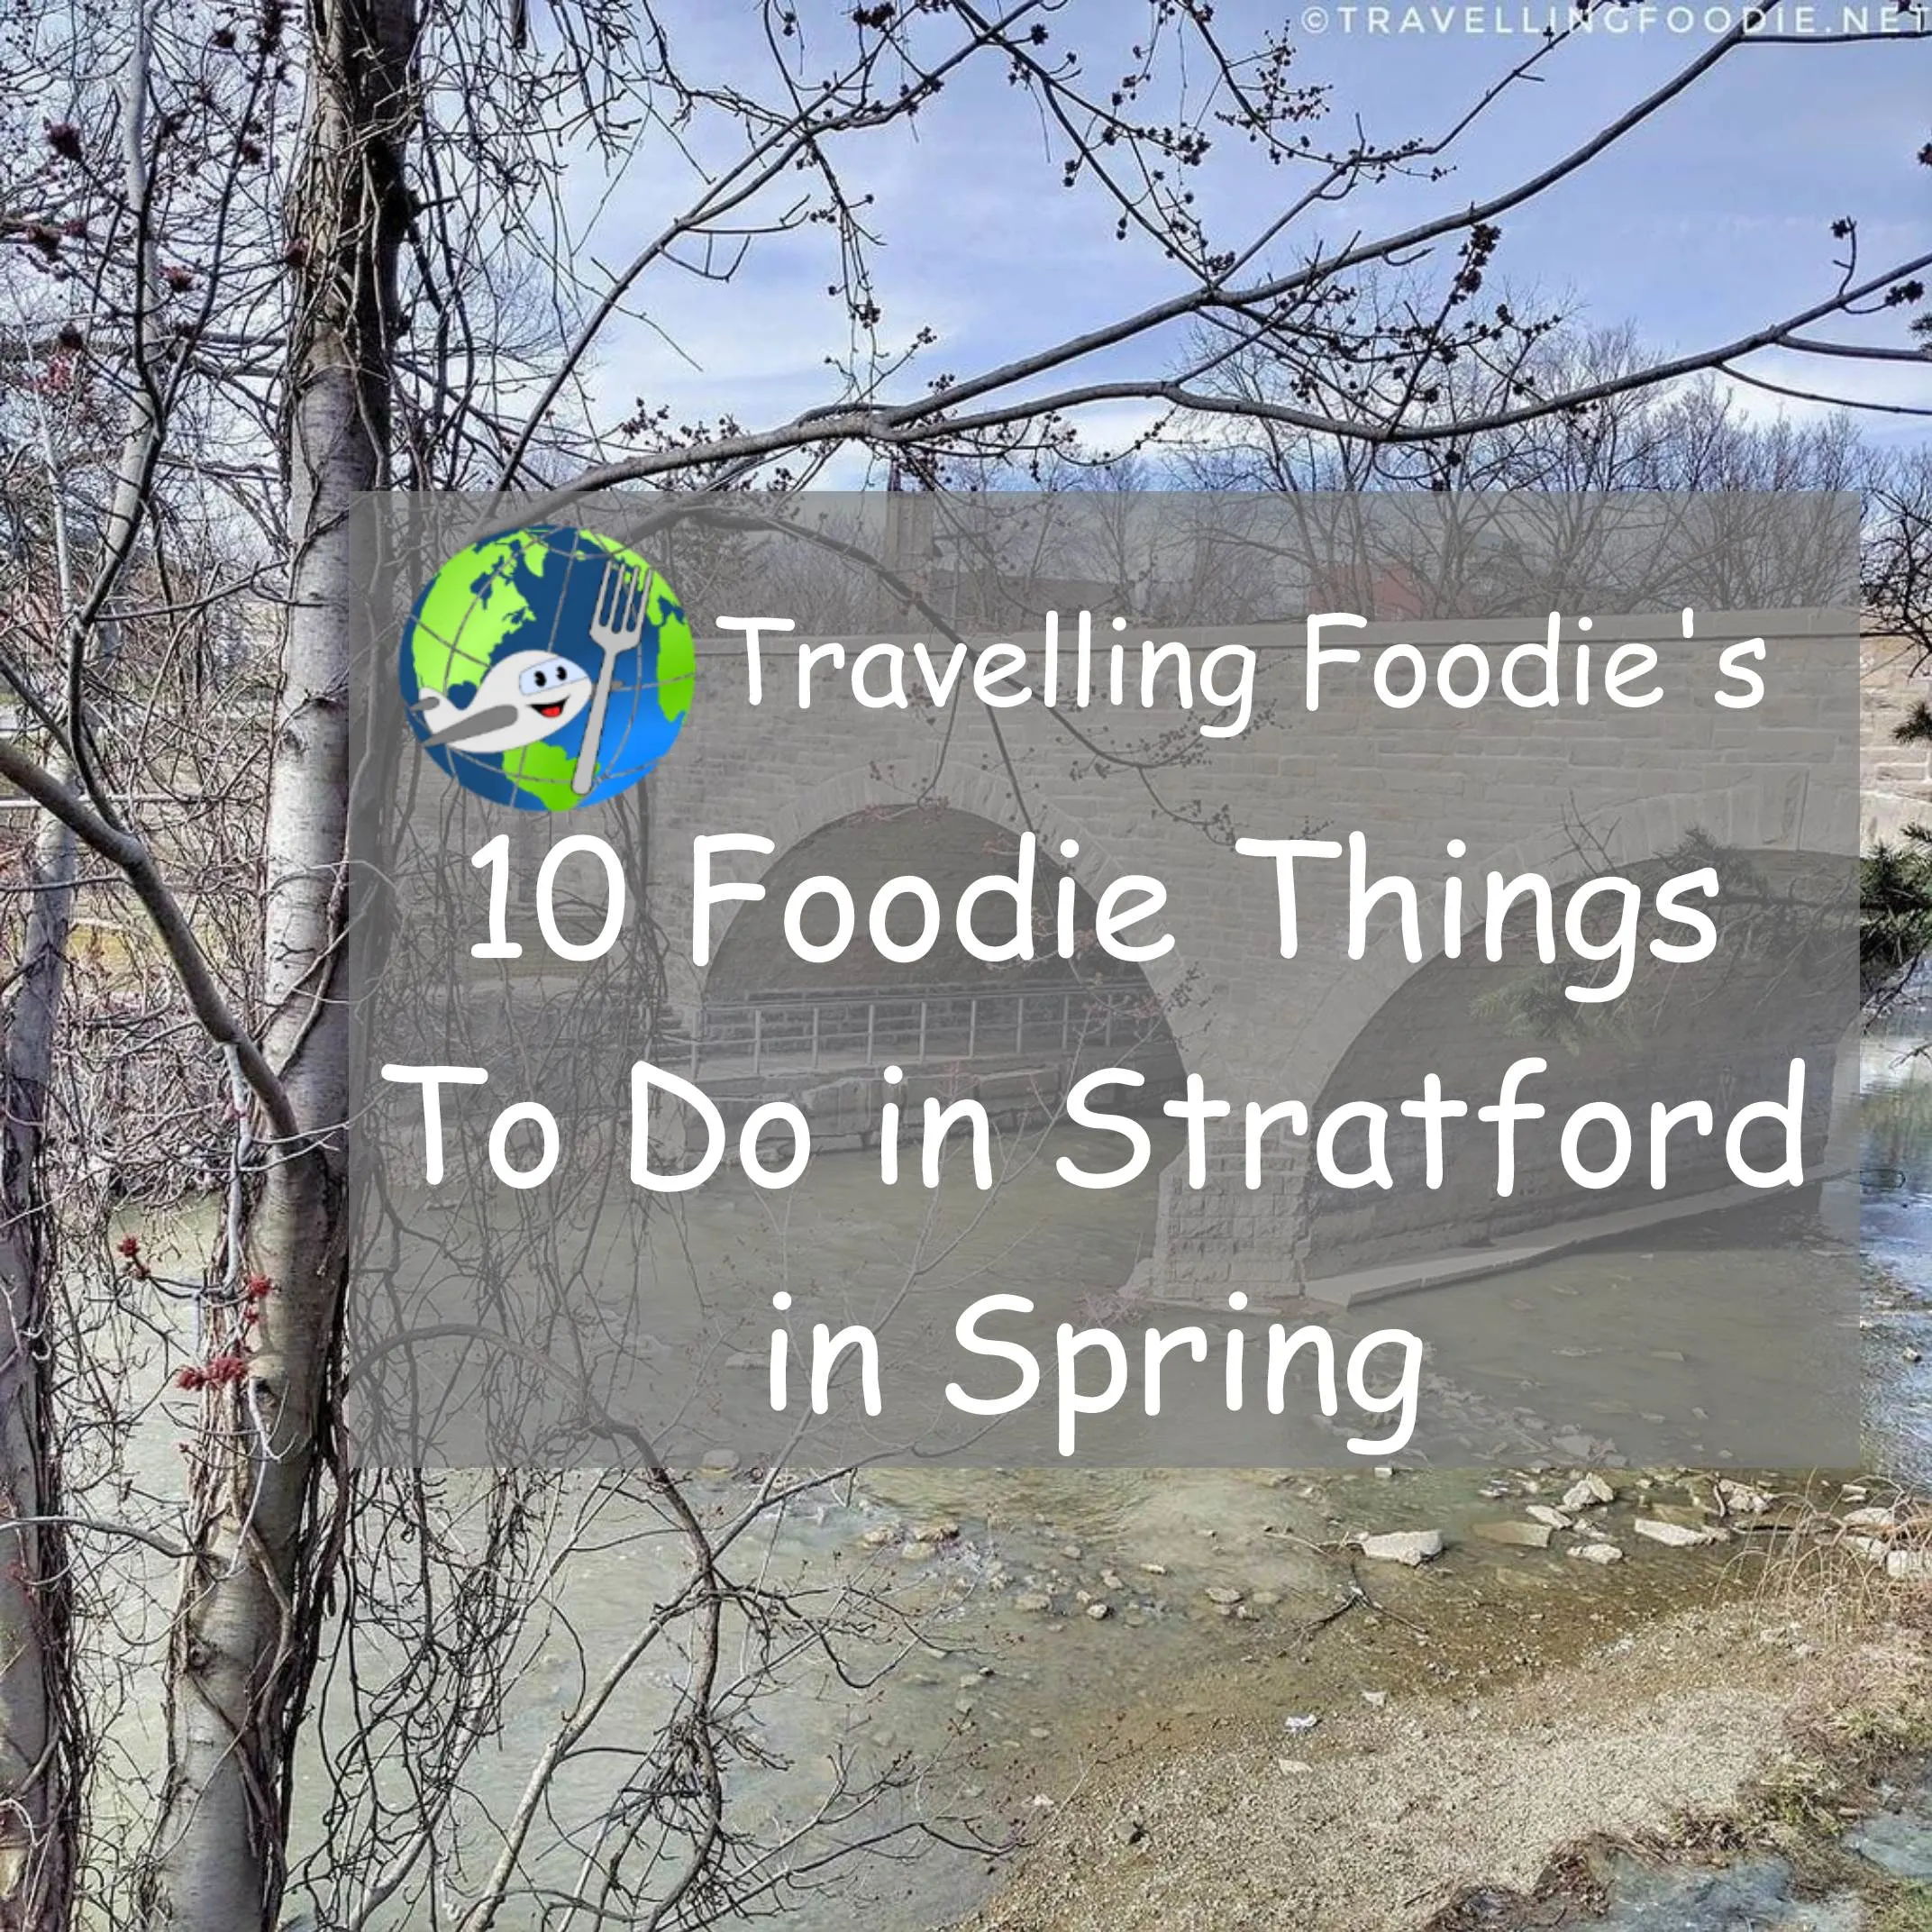 Travelling Foodie's 10 Foodie Things To Do in Stratford in Spring